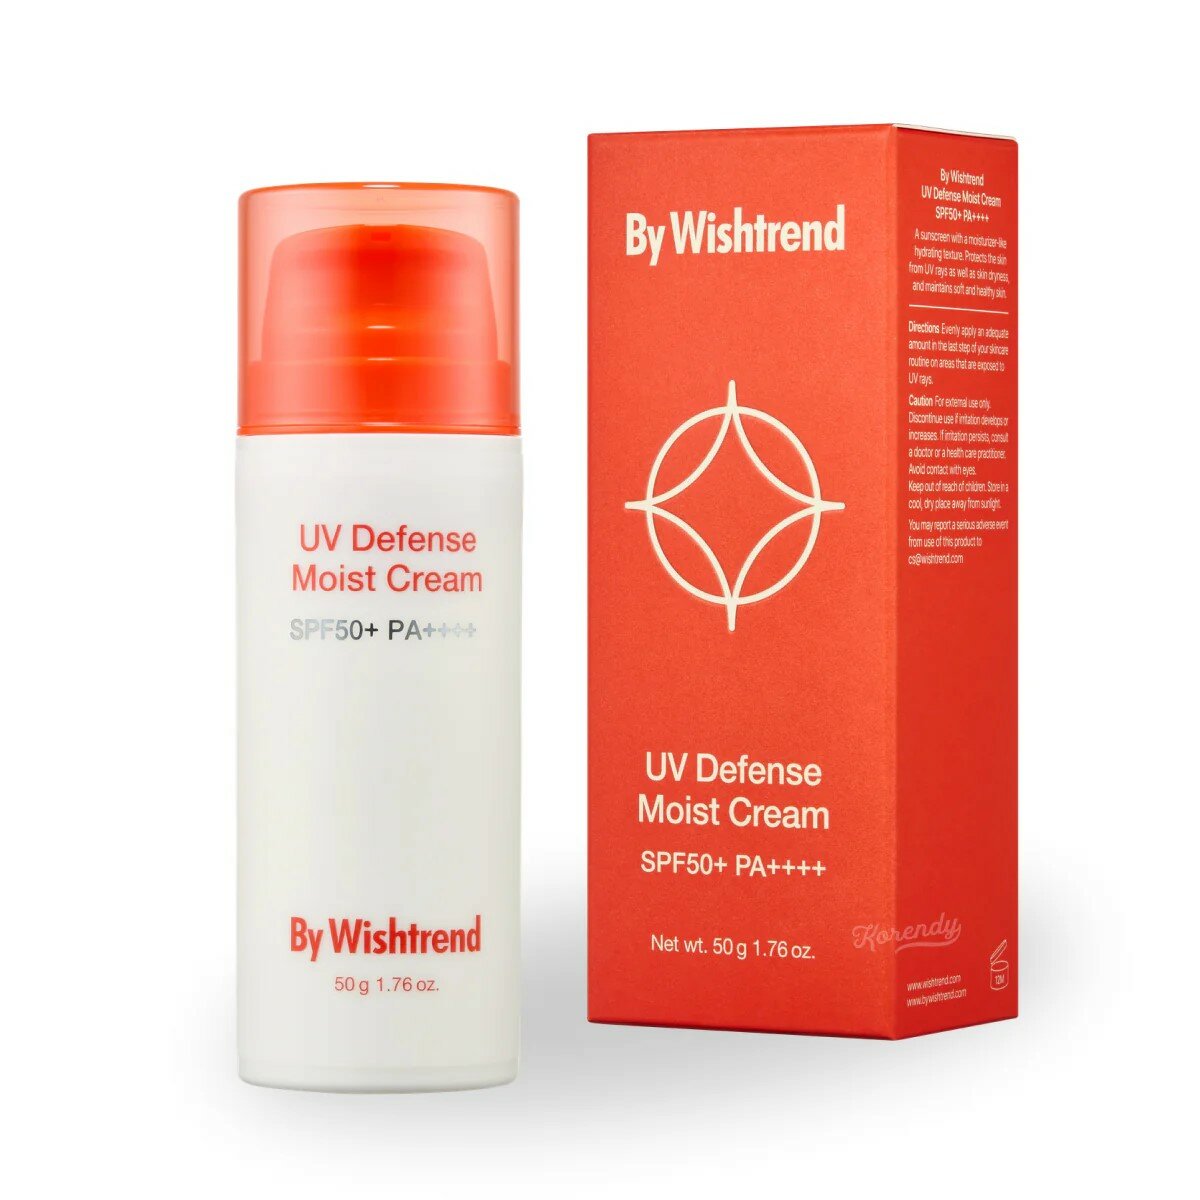 By Wishtrend UV Defense Moist Cream Увлажняющий солнцезащитный крем с пантенолом SPF 50+ PA++++, 50 мл.